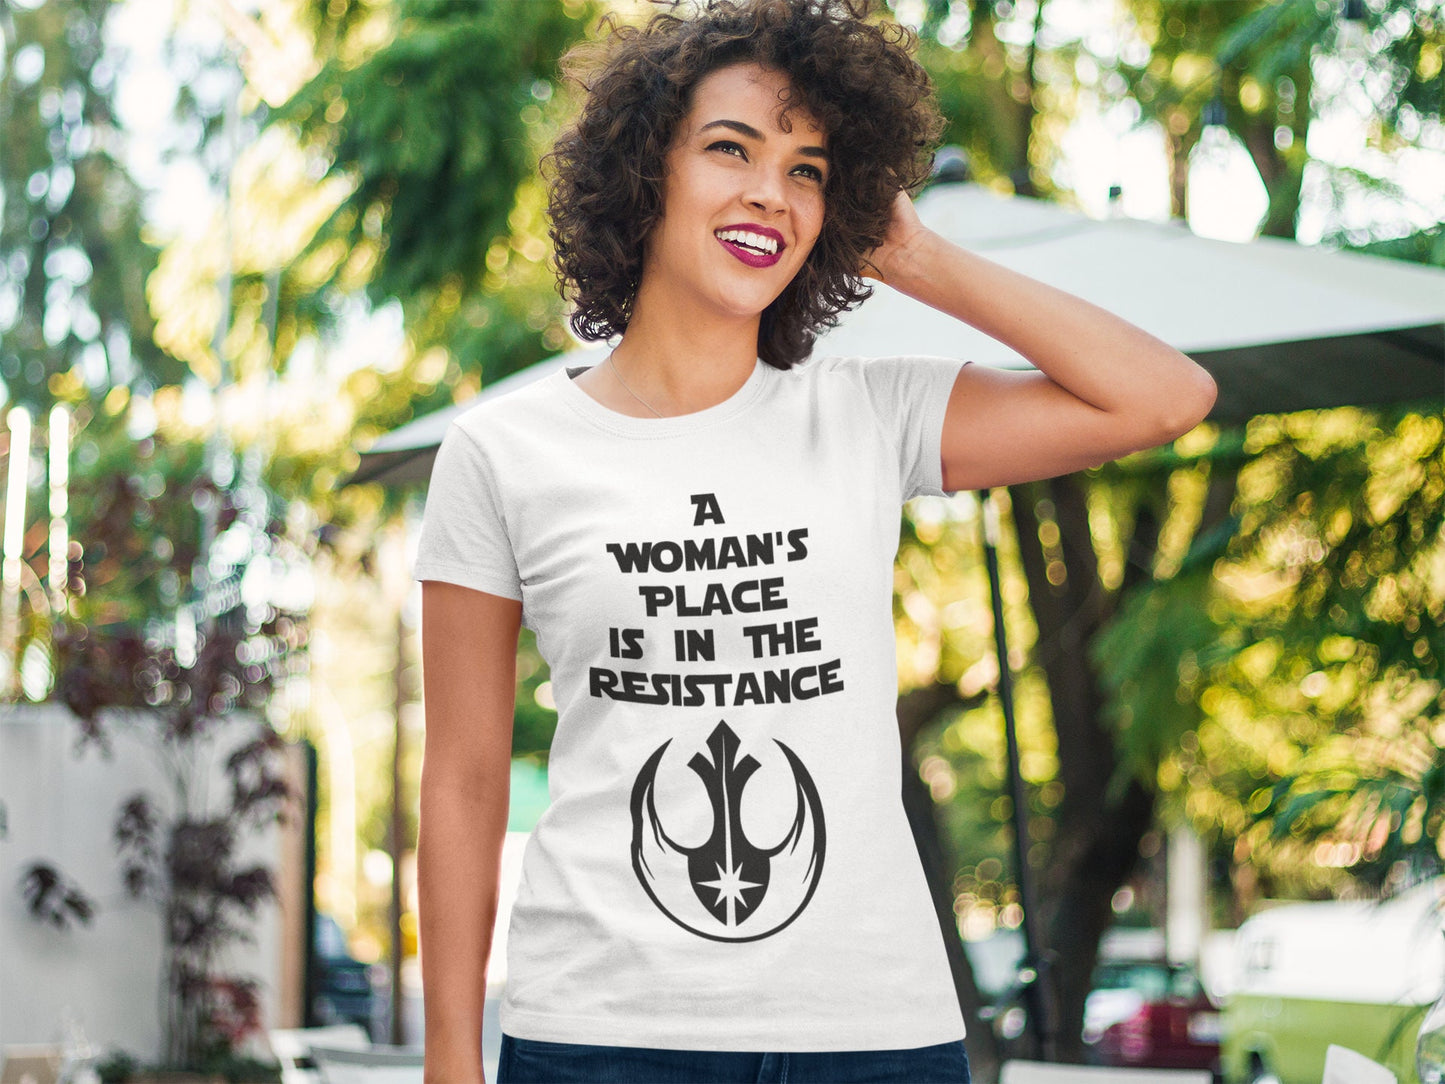 A Woman's Place Is In the Resistance Shirt, Jedi Shirt, Warrior Princess Shirt, Disney Trip Shirt, Vacation Shirt, Resist Shirt